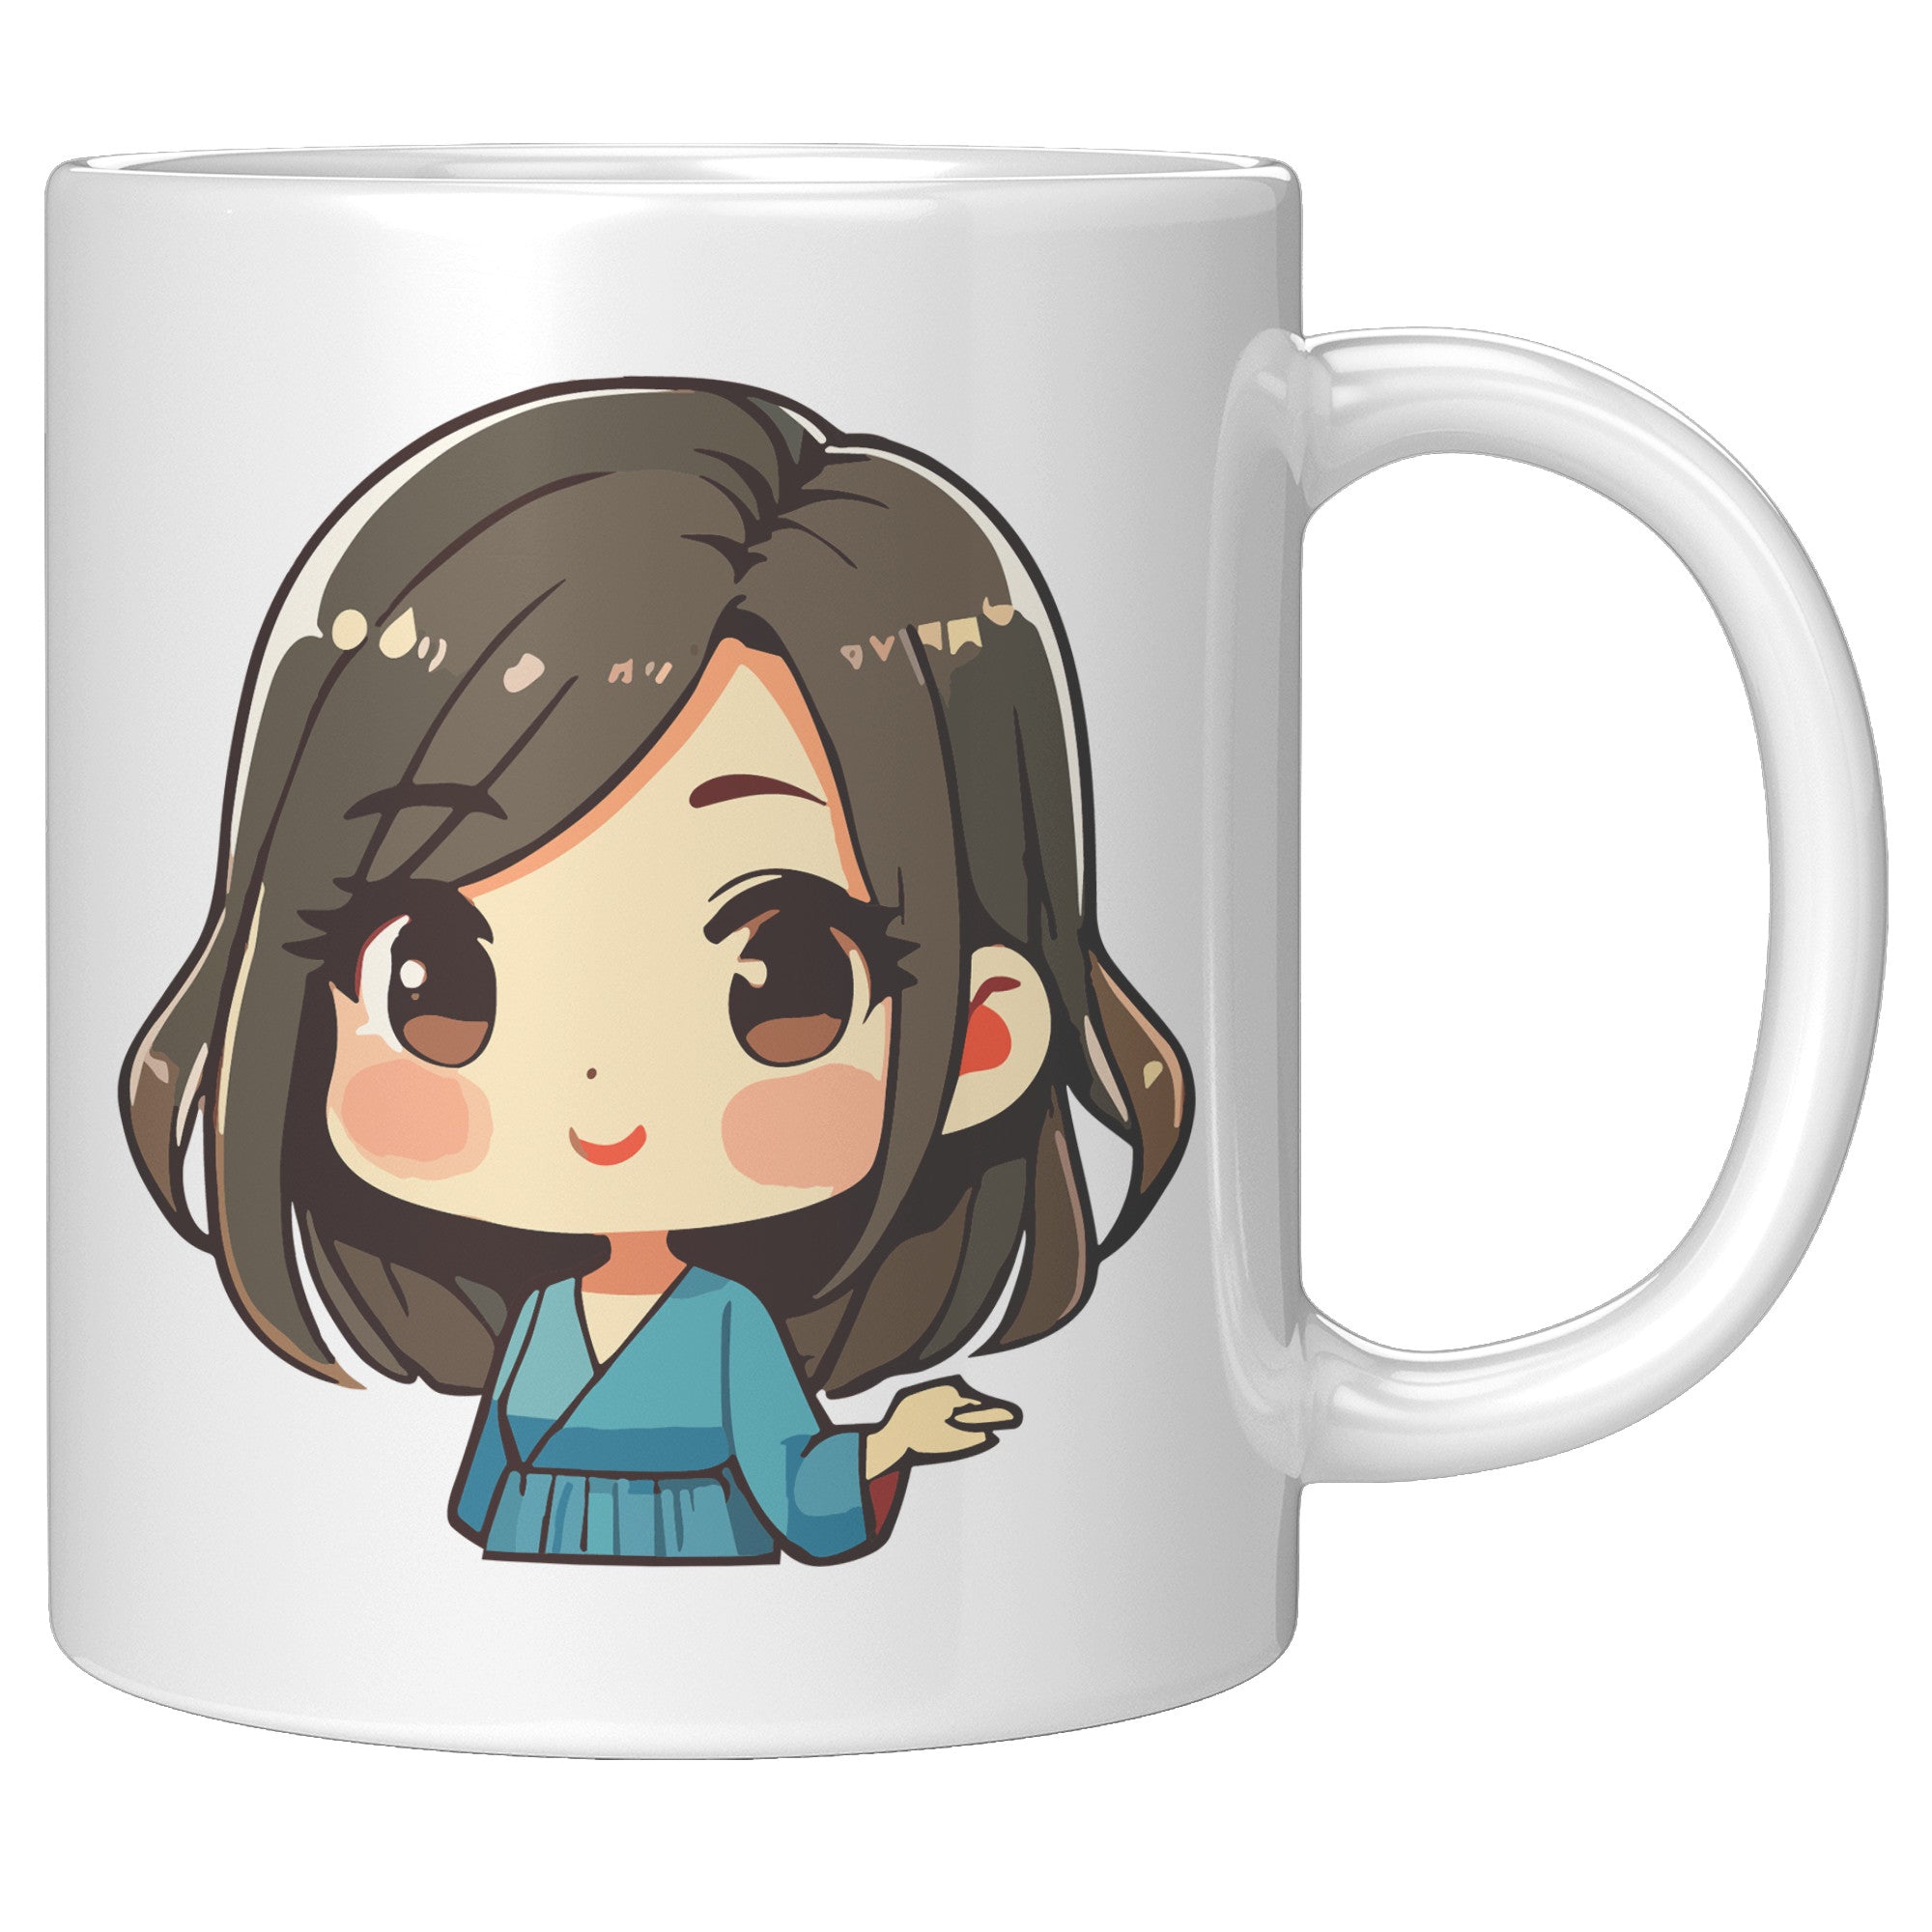 "Marites Gossip Queen Coffee Mug - Cute Cartoon 'Ano Ang Latest?' Cup - Perfect Chismosa Gift - Filipino Slang Tea Mug" - DD